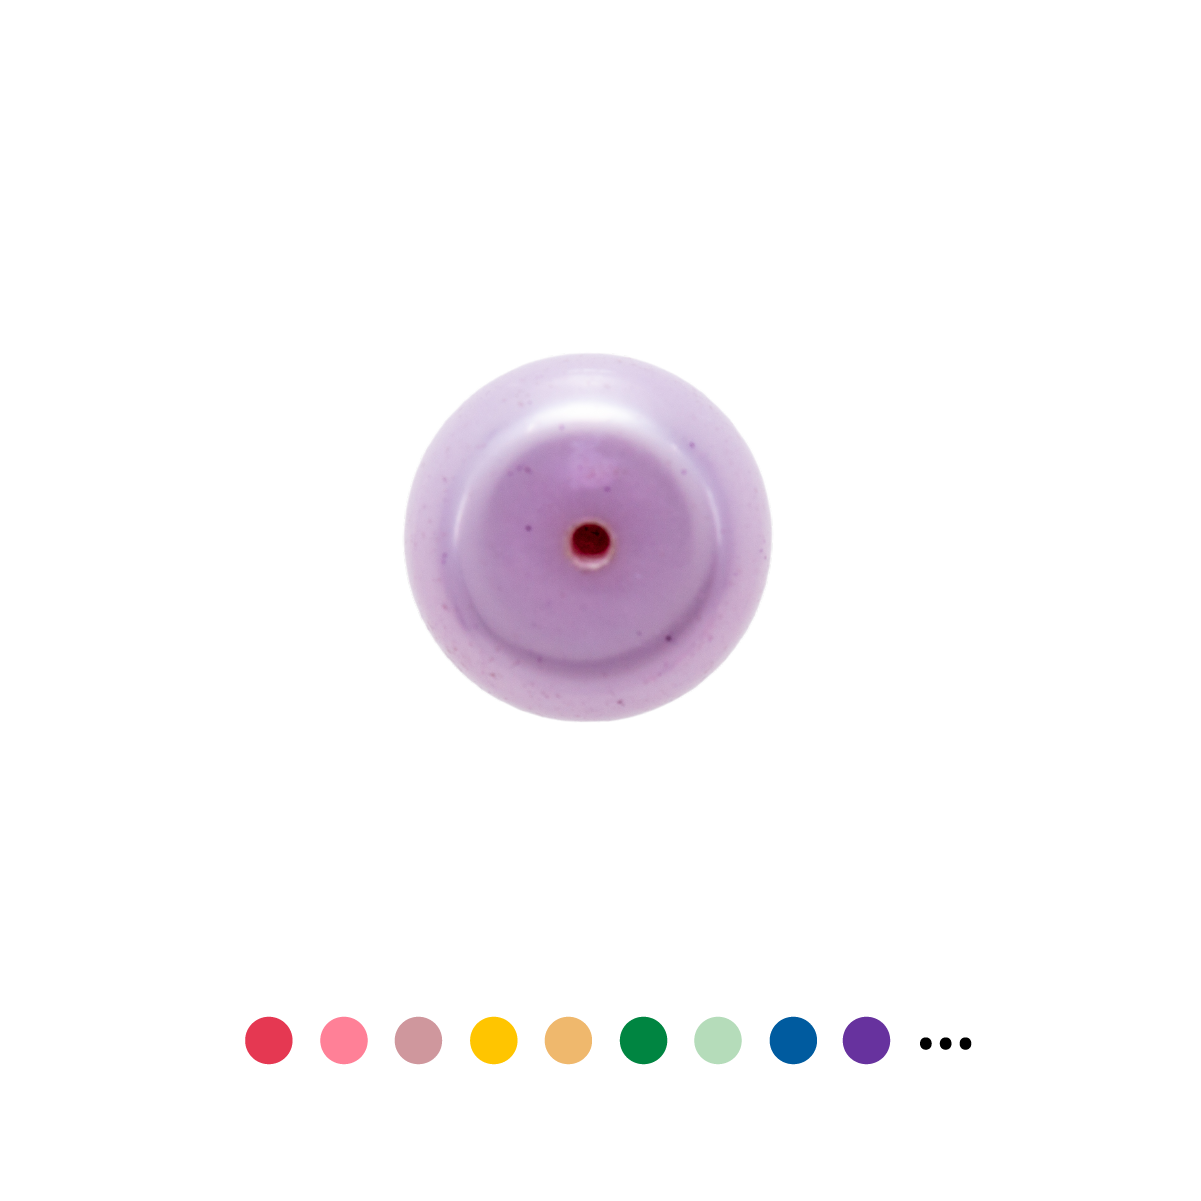 Perla suelta en forma de botón con fondo plano preperforado de 8-10 mm